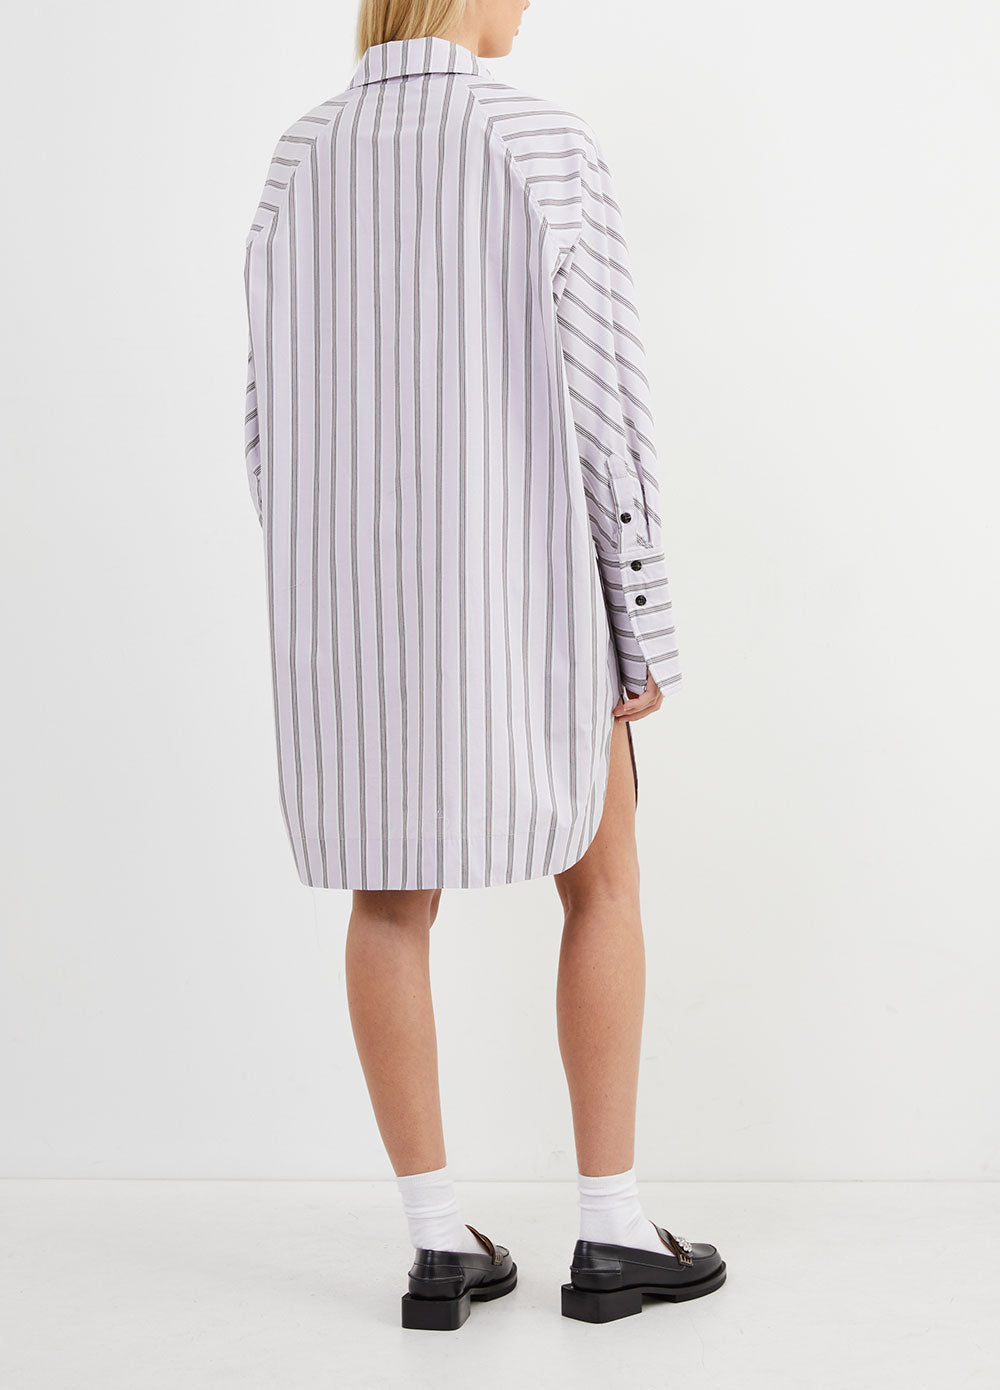 Stripe Cotton Oversized Shirt Dress